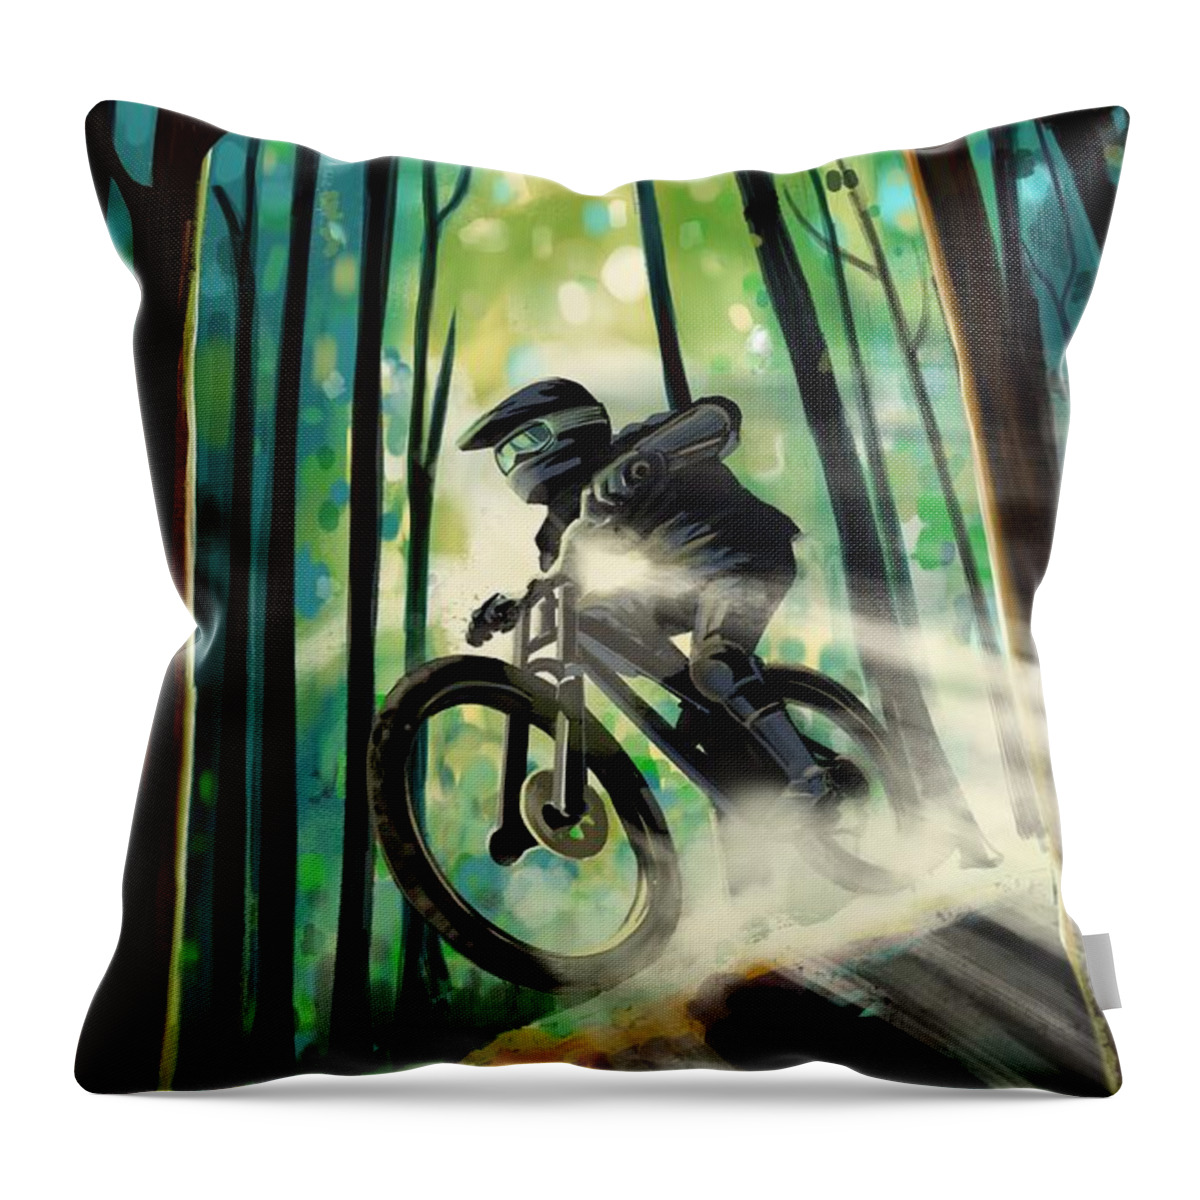 Mountain Bike Throw Pillow featuring the painting Forest jump mountain biker by Sassan Filsoof